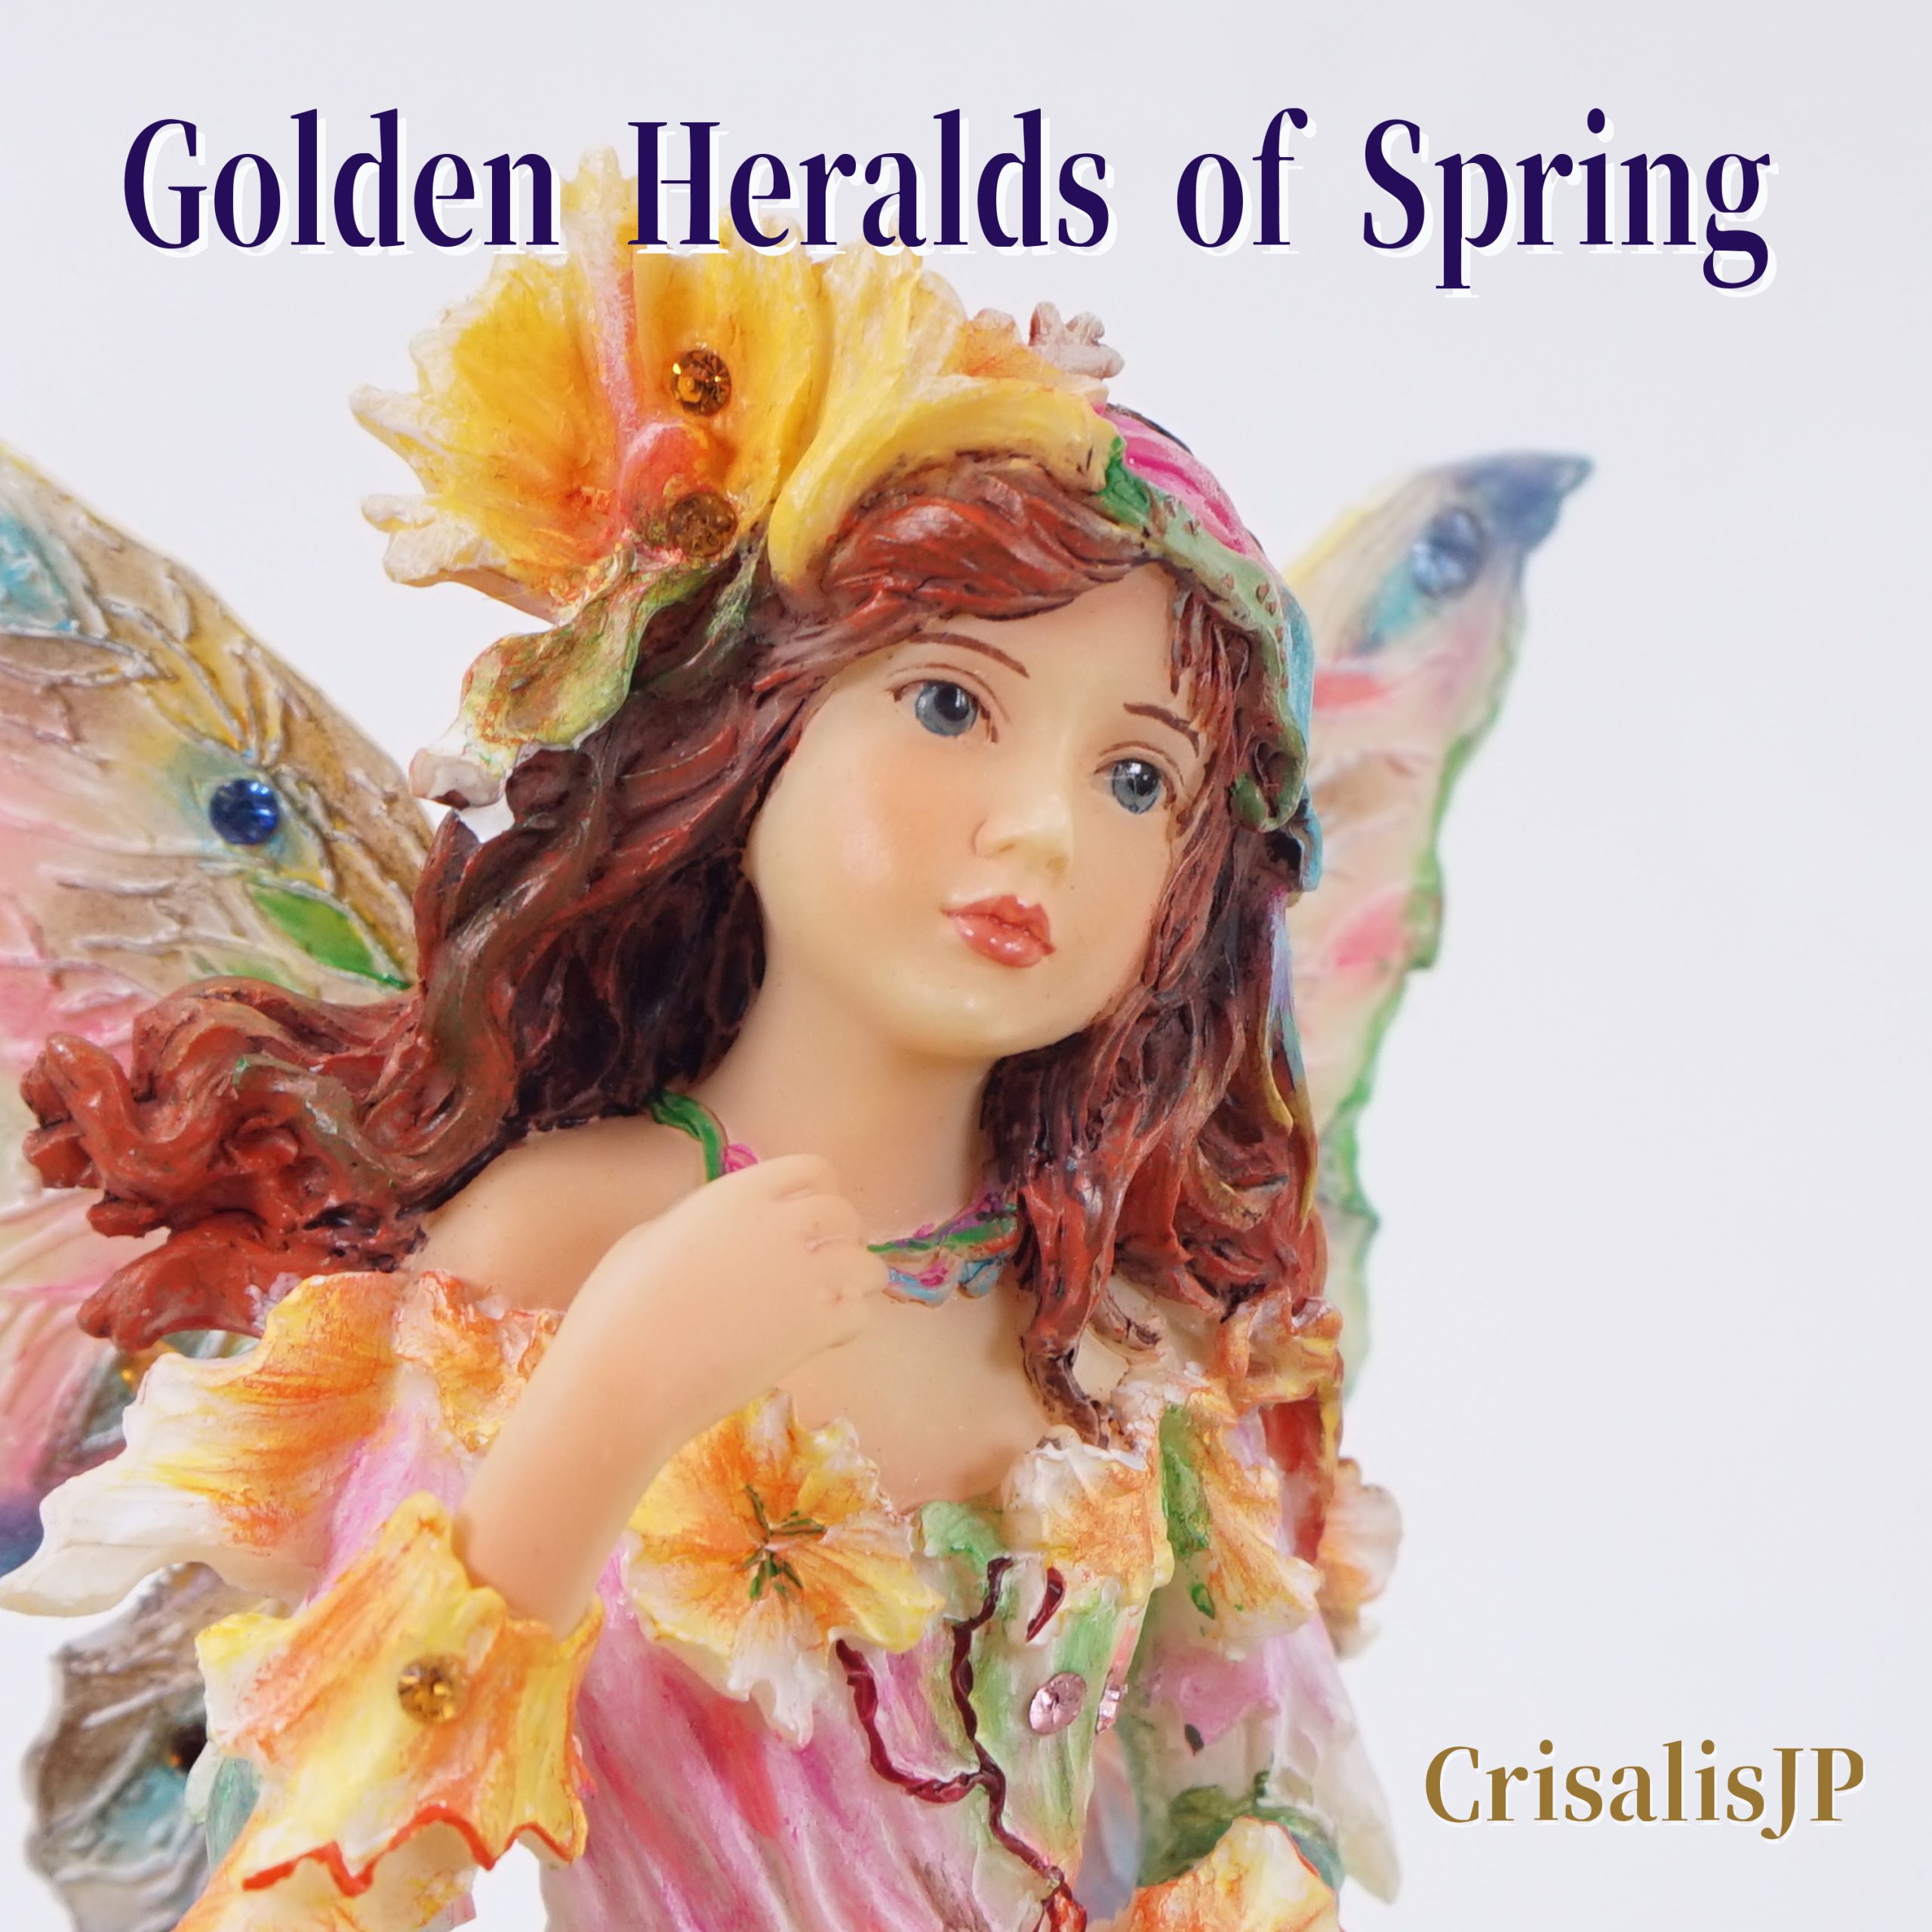 Golden Heralds of Spring